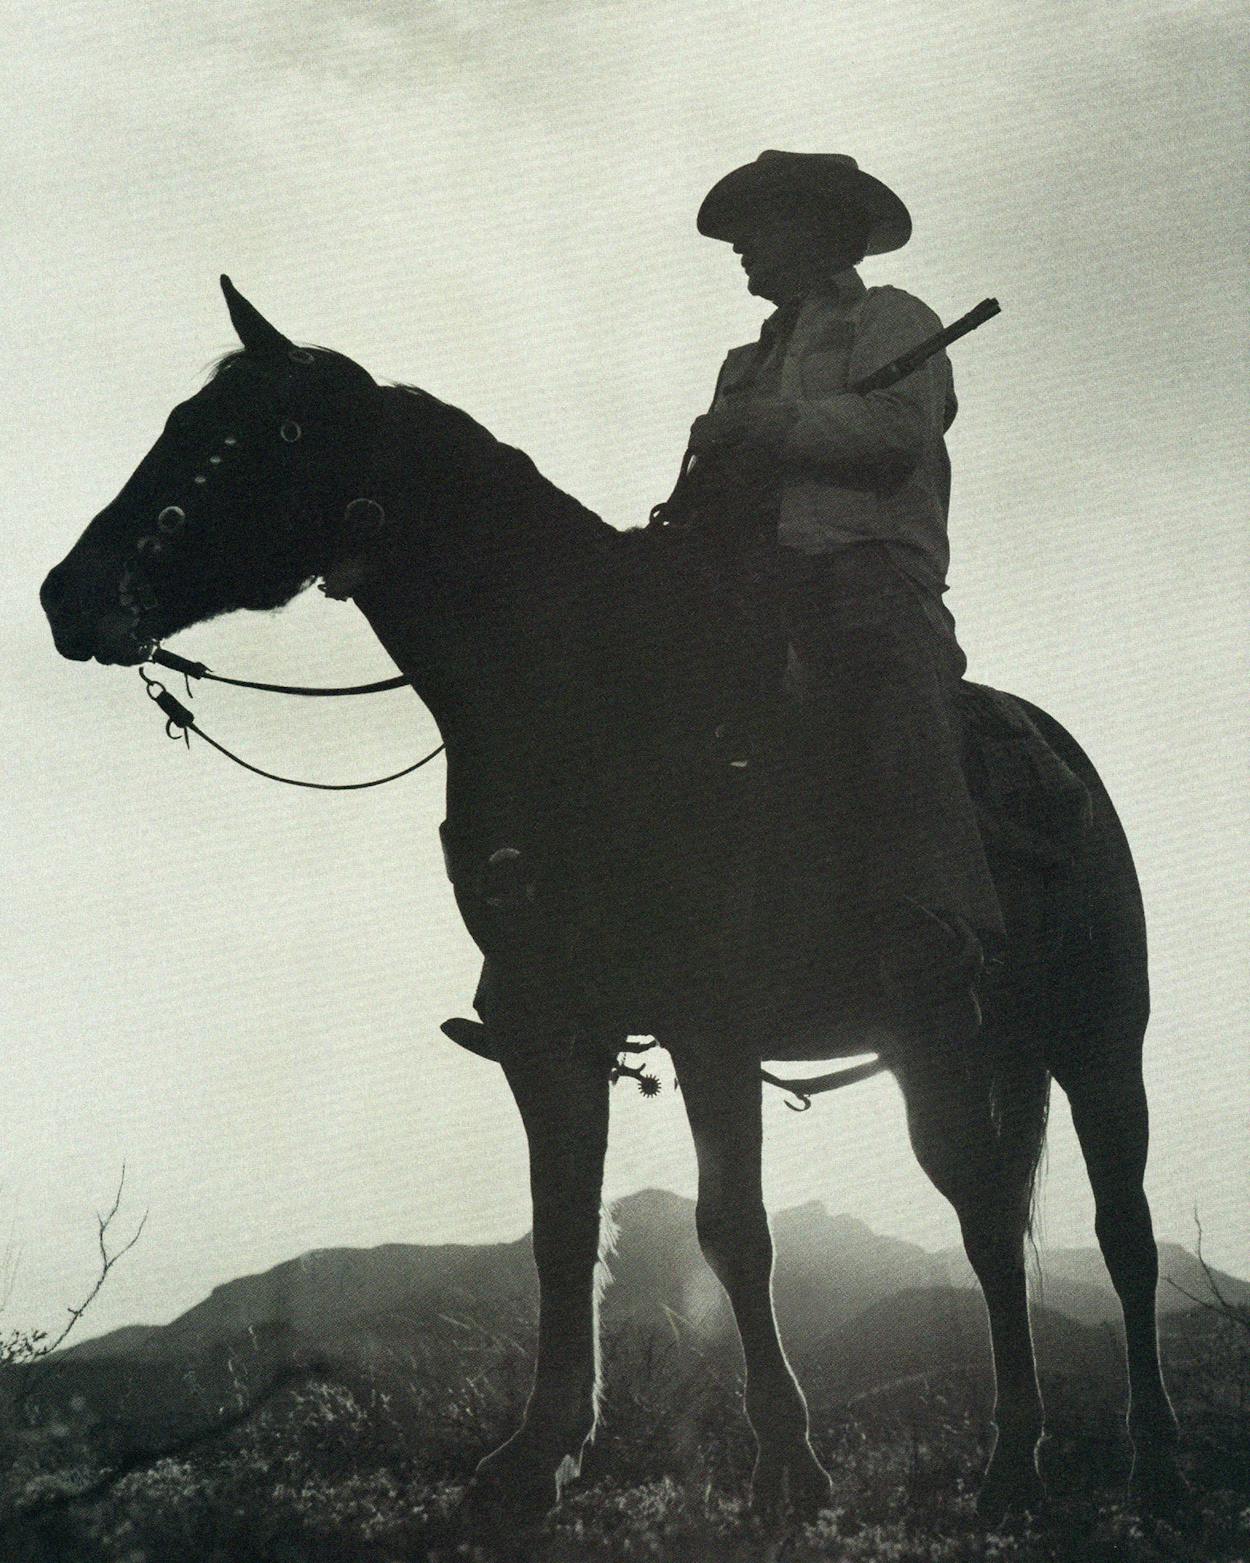 The Lasting Influence of Texas Ranger Joaquin Jackson - True West